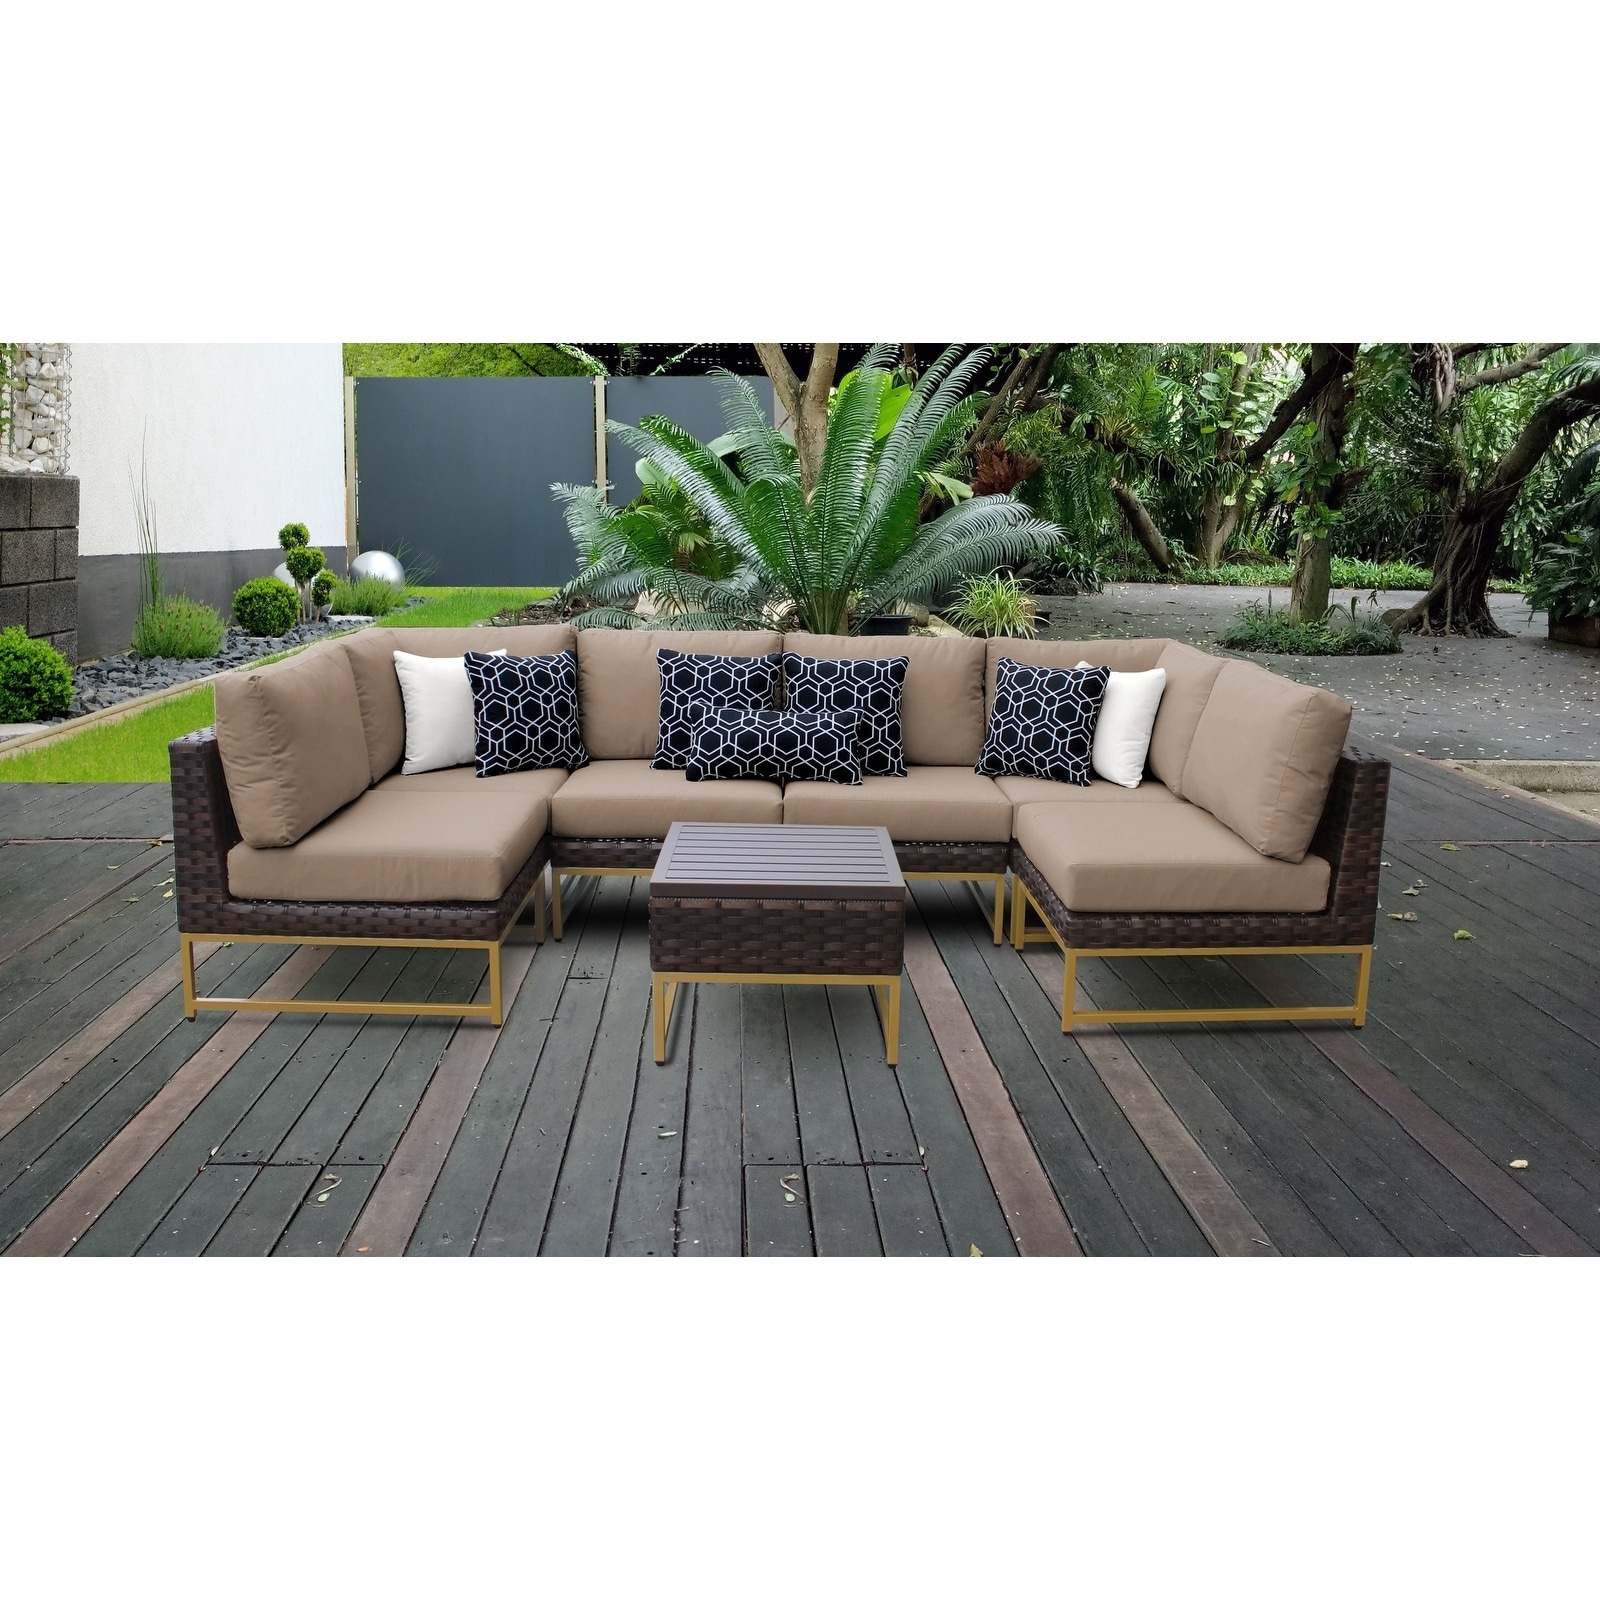 Amalfi 7 Piece Outdoor Wicker Patio Furniture Set 07c -  TK Classics, BRCLN-07c-GLD-WHEAT